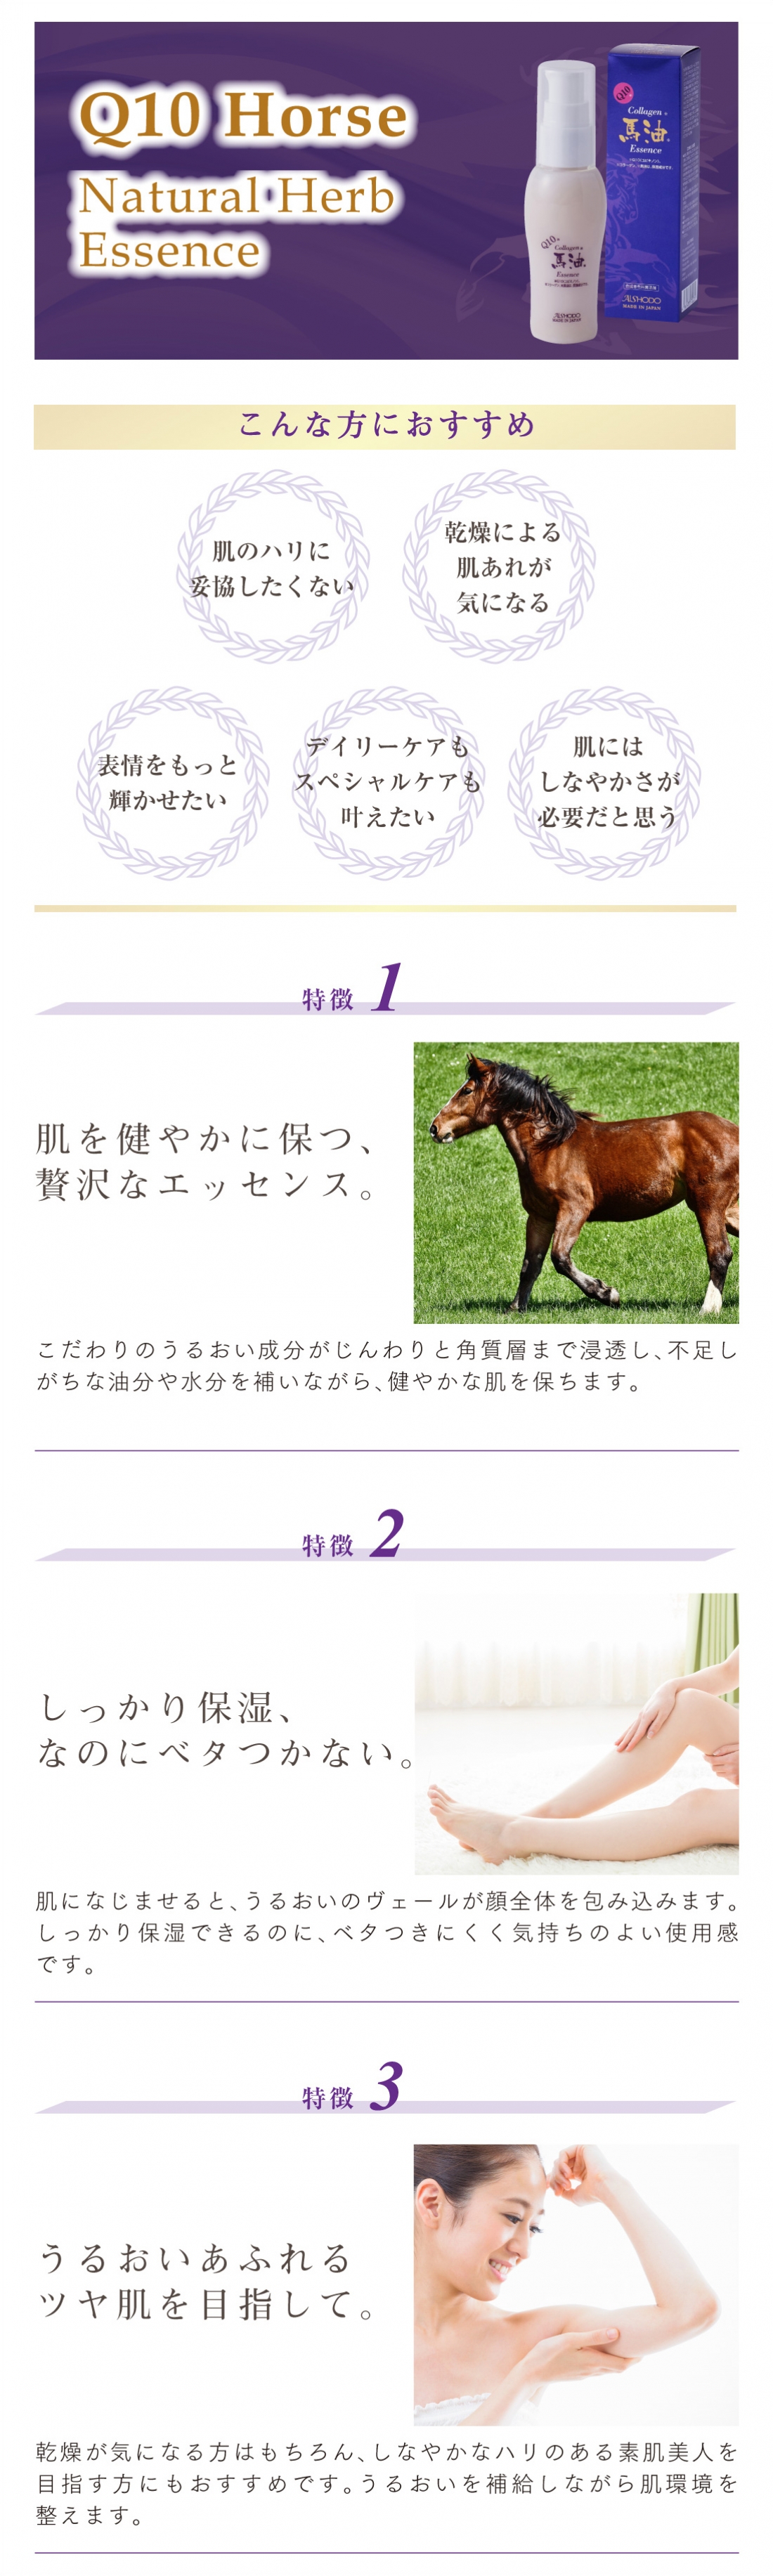 Q10馬油ナチュラルハーブエッセンス(美容液) 
Q10 Horse Natural Herb Essence